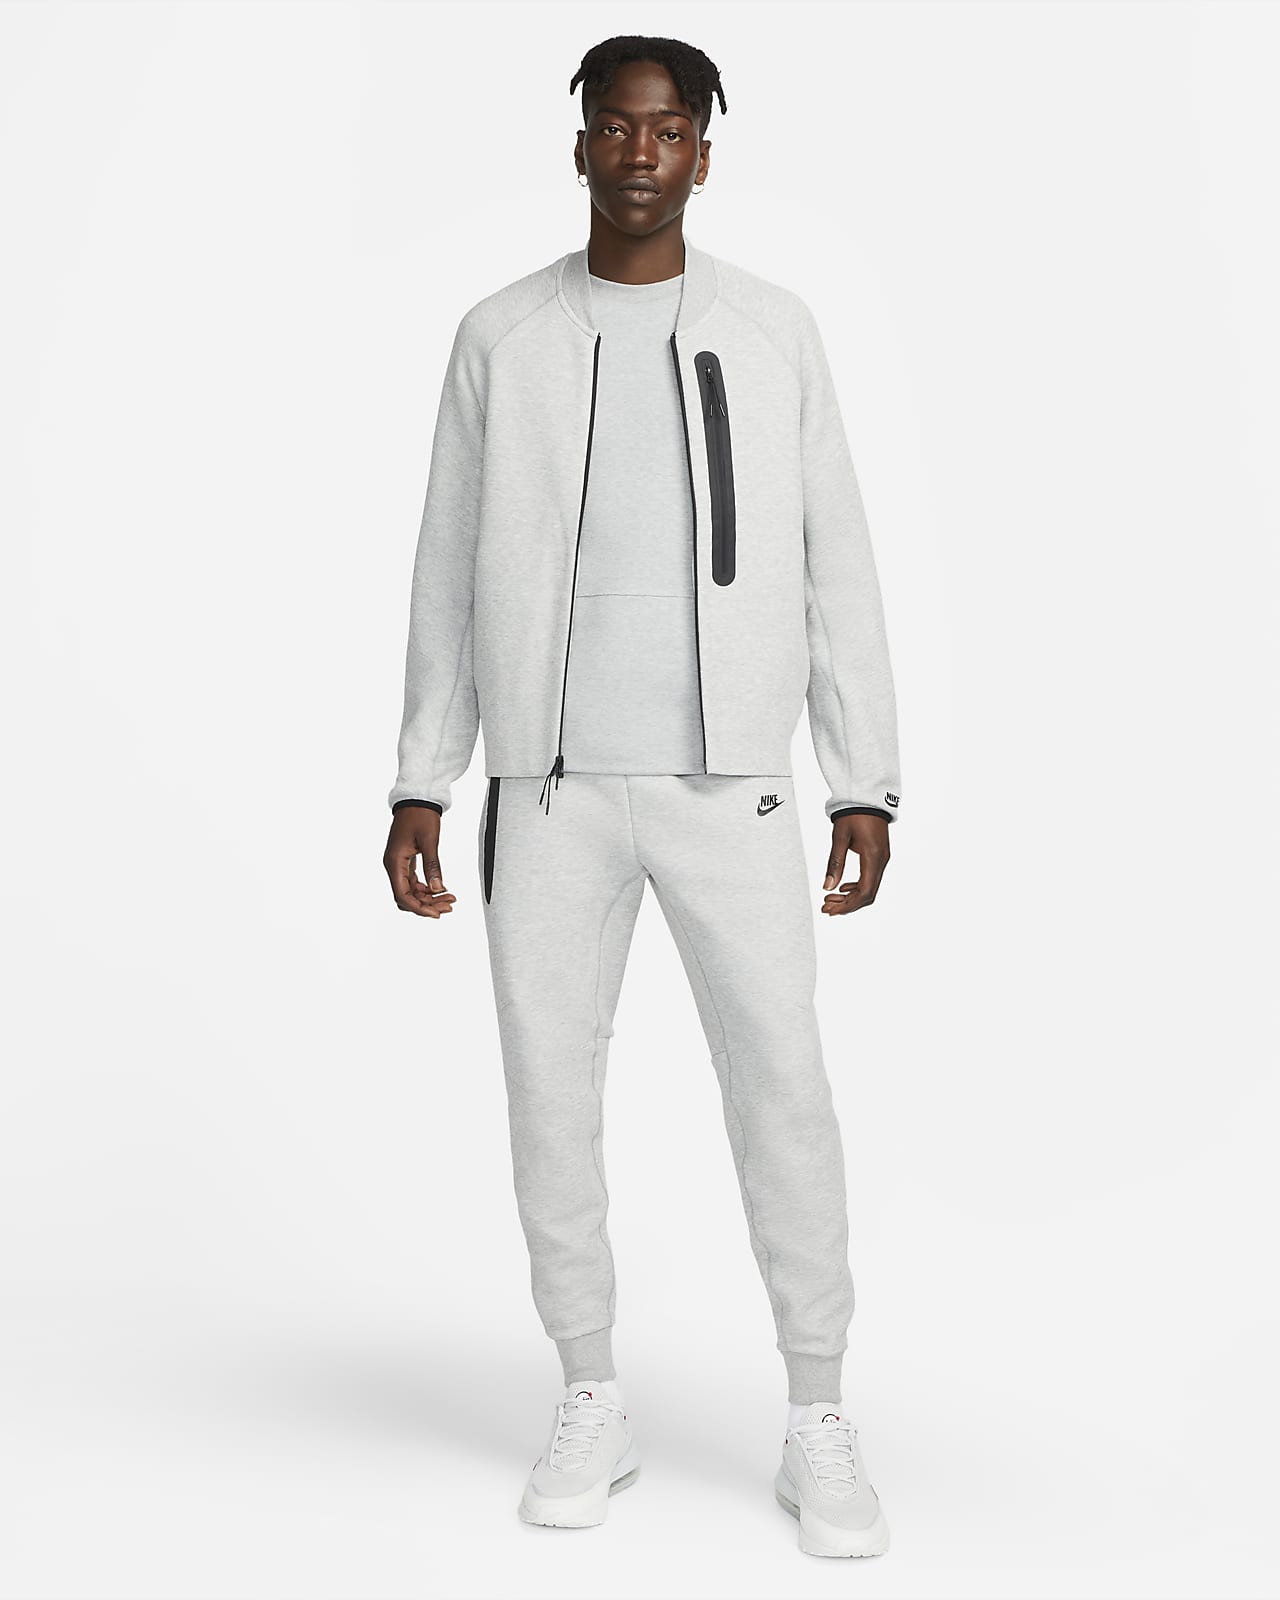 Women's Nike Sportswear Tech Fleece Pants 2XL Zipper White Black Training  Casual